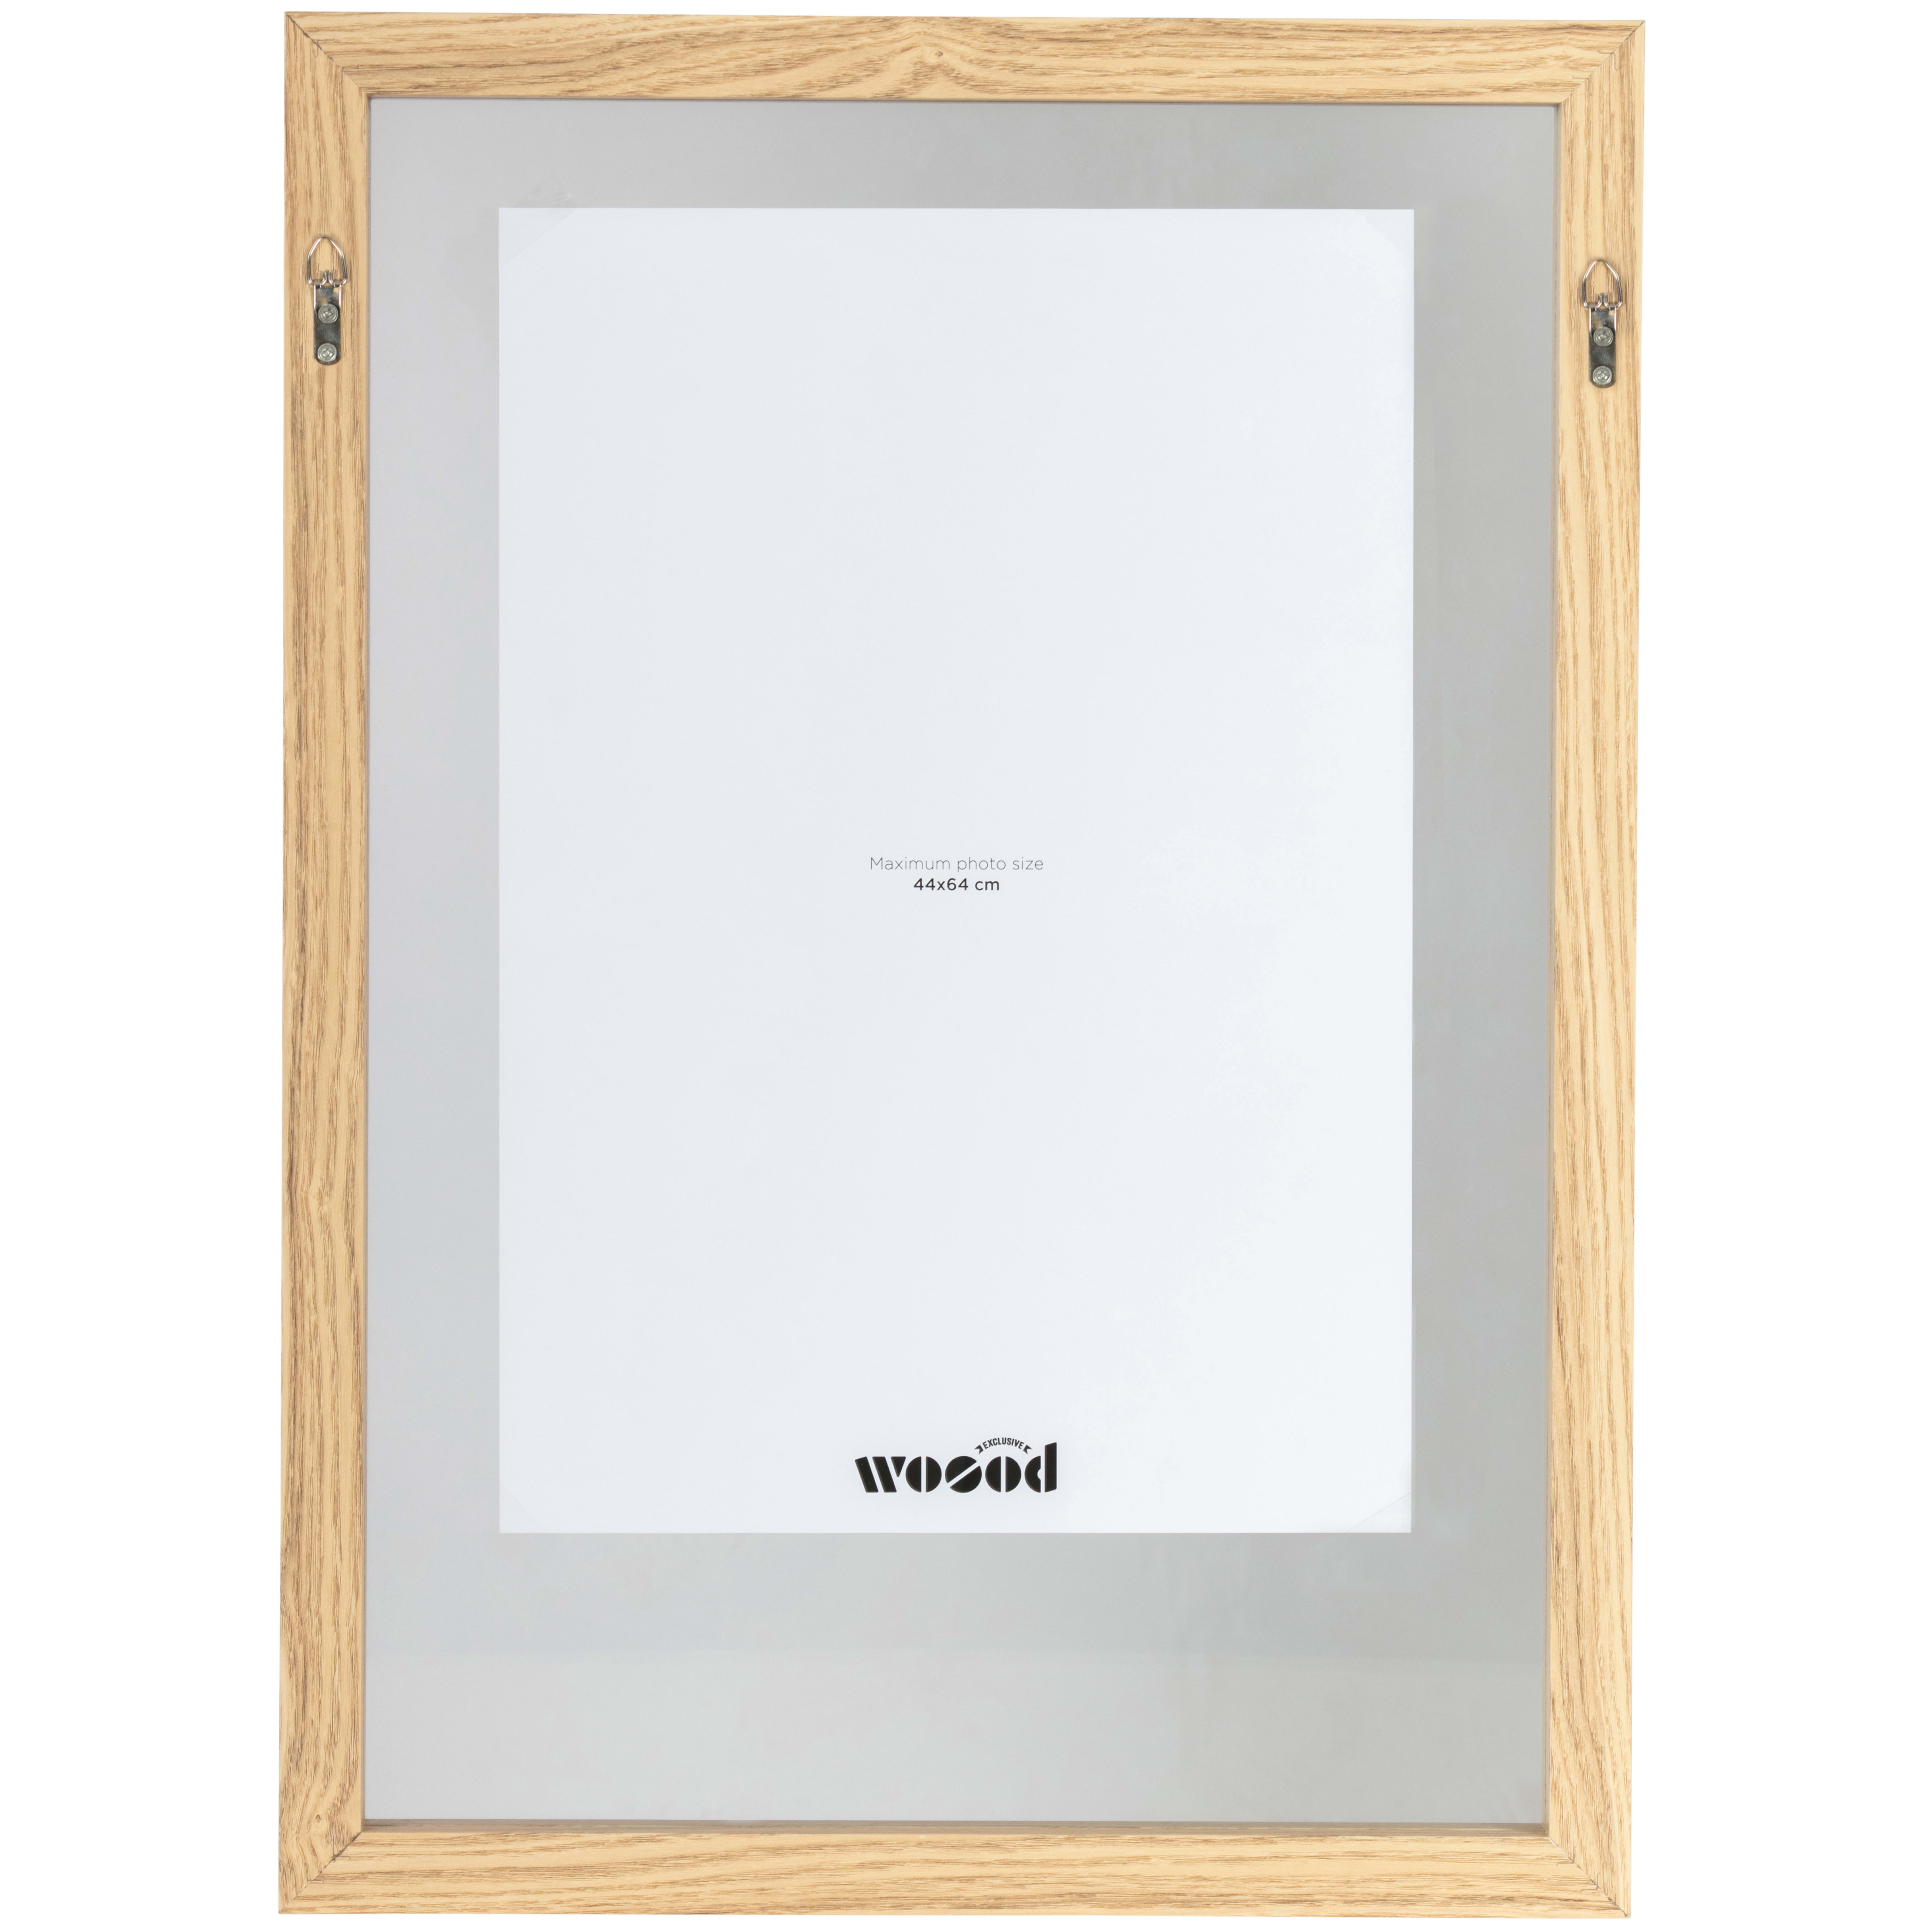 Marco 50x70 cm de madera con tu foto personalizada GRATIS – Misswood